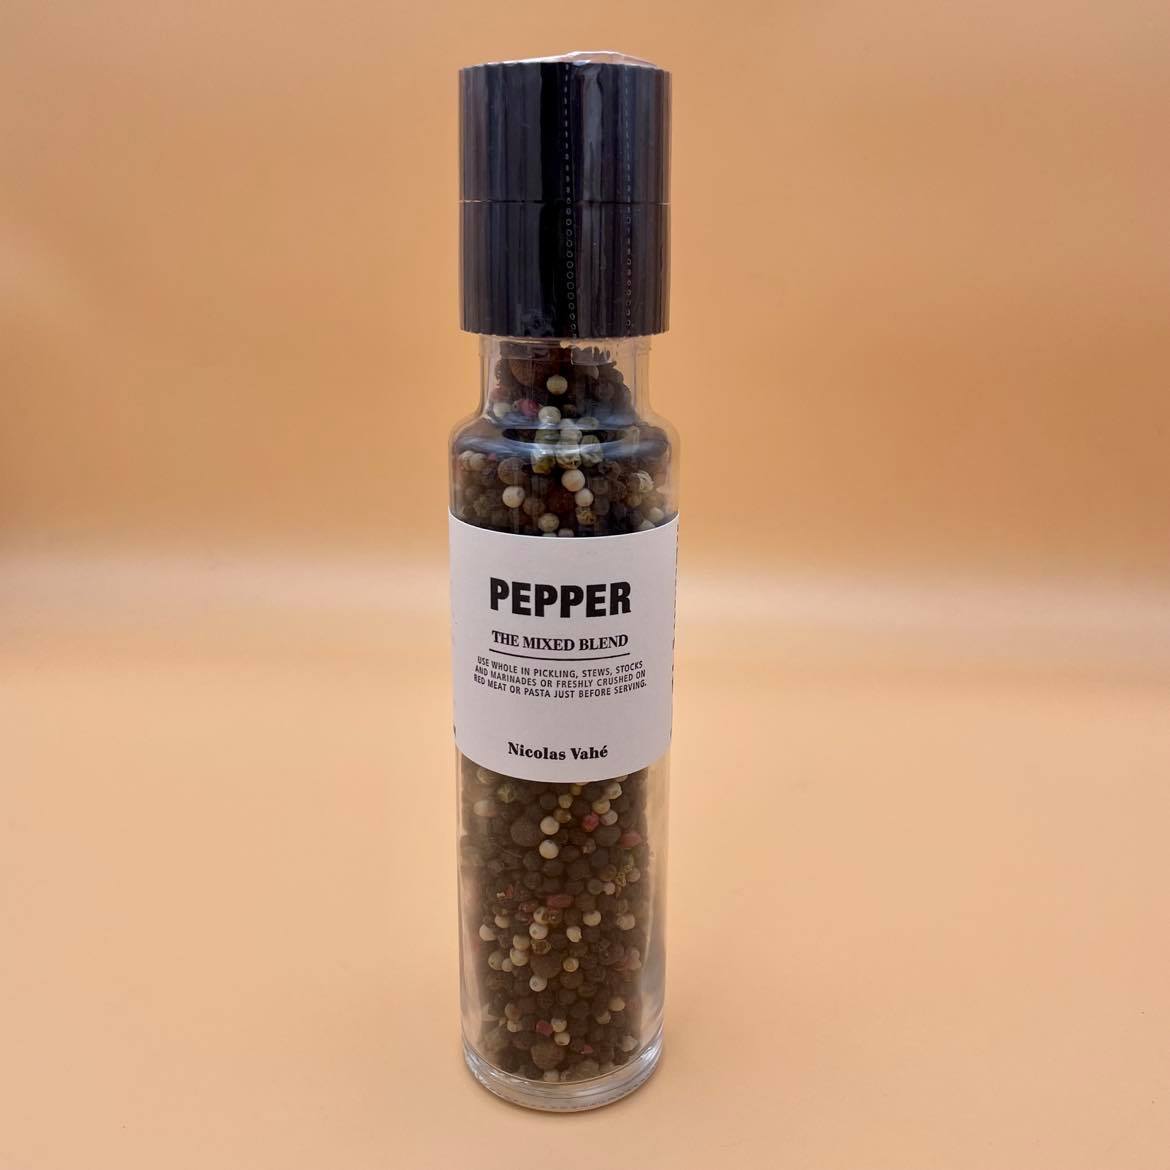 Peper - The mixed blend - Nicolas Vahé